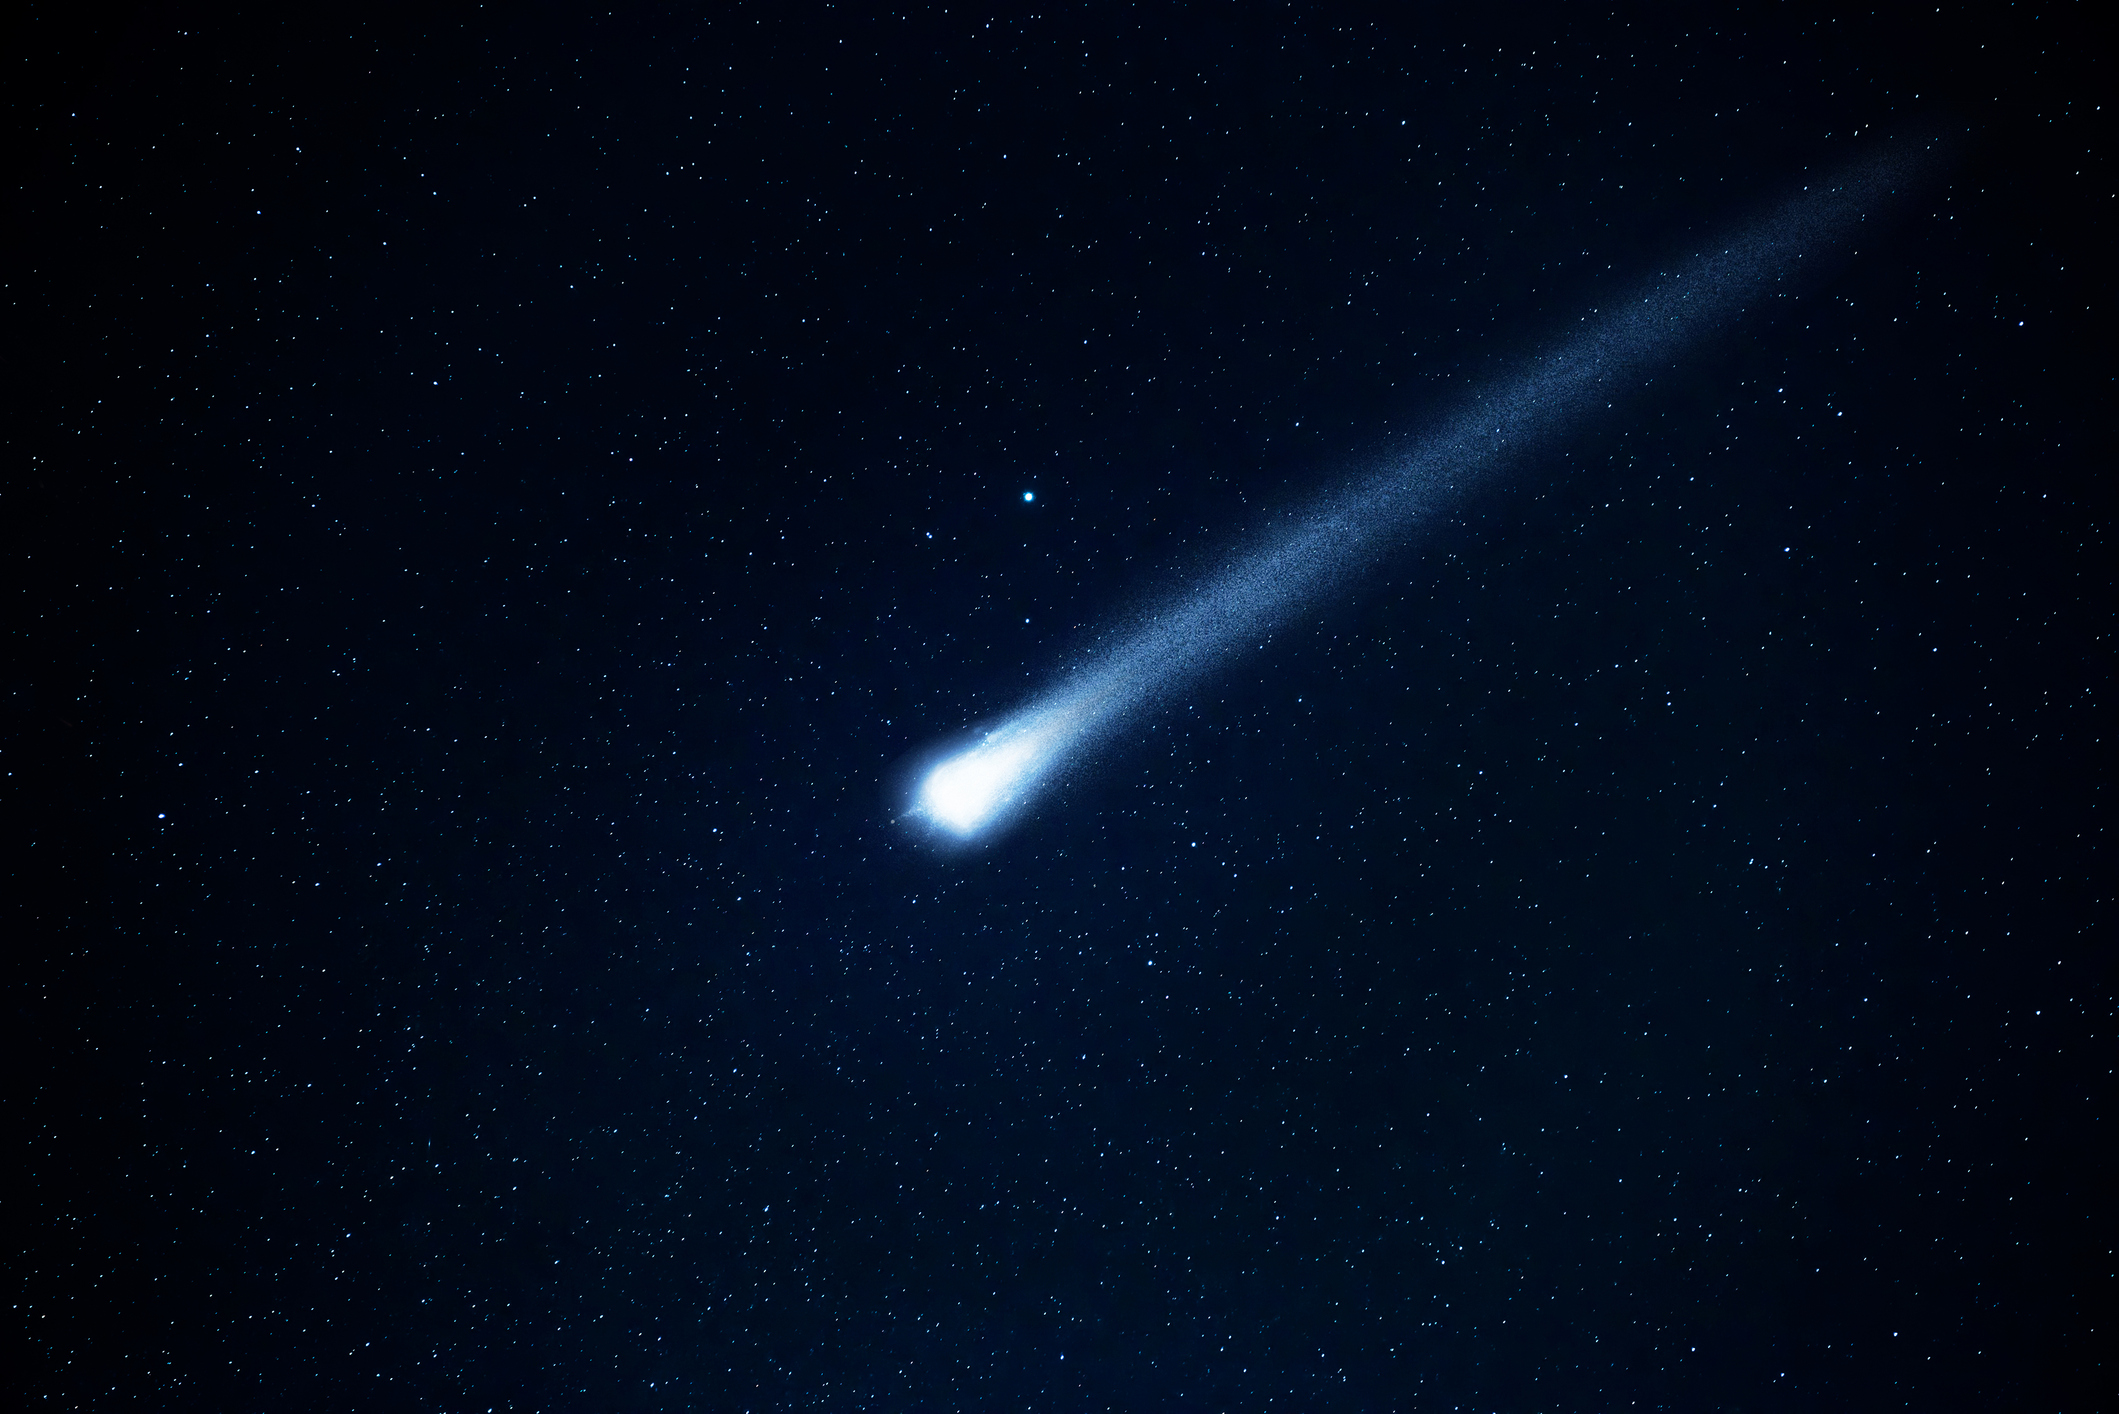 An asteroid.